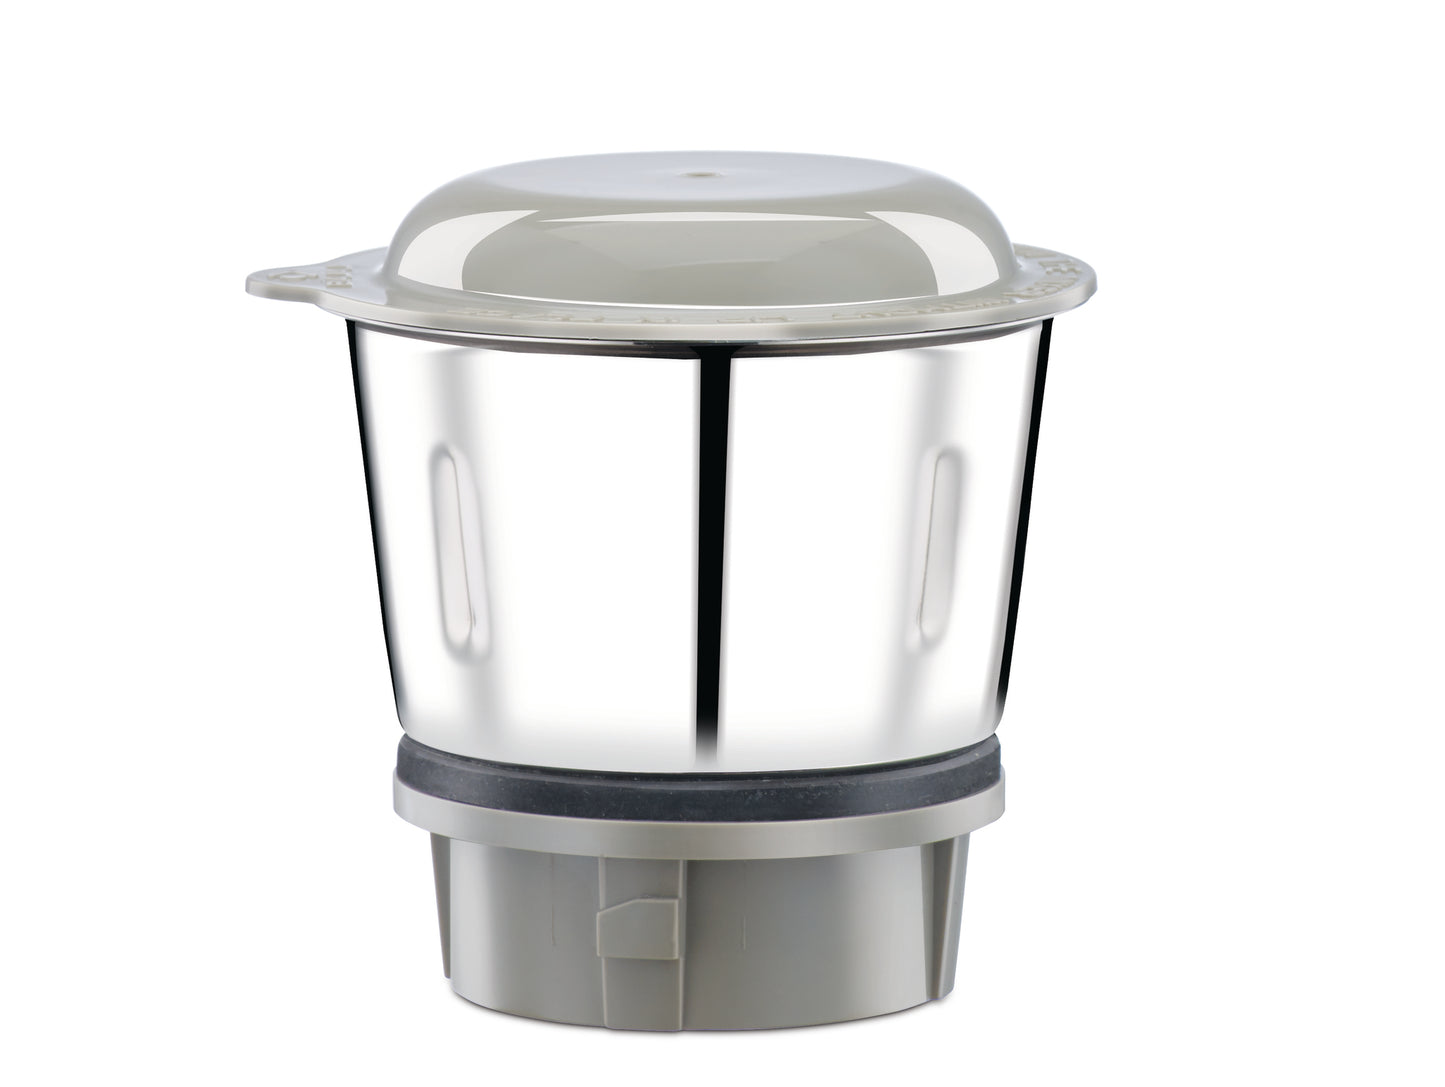 Bajaj Ivora Silky Caramel 800 Watts, 3 Jar Mixer Grinder with Anti-Germ & Anti-Dust Coating